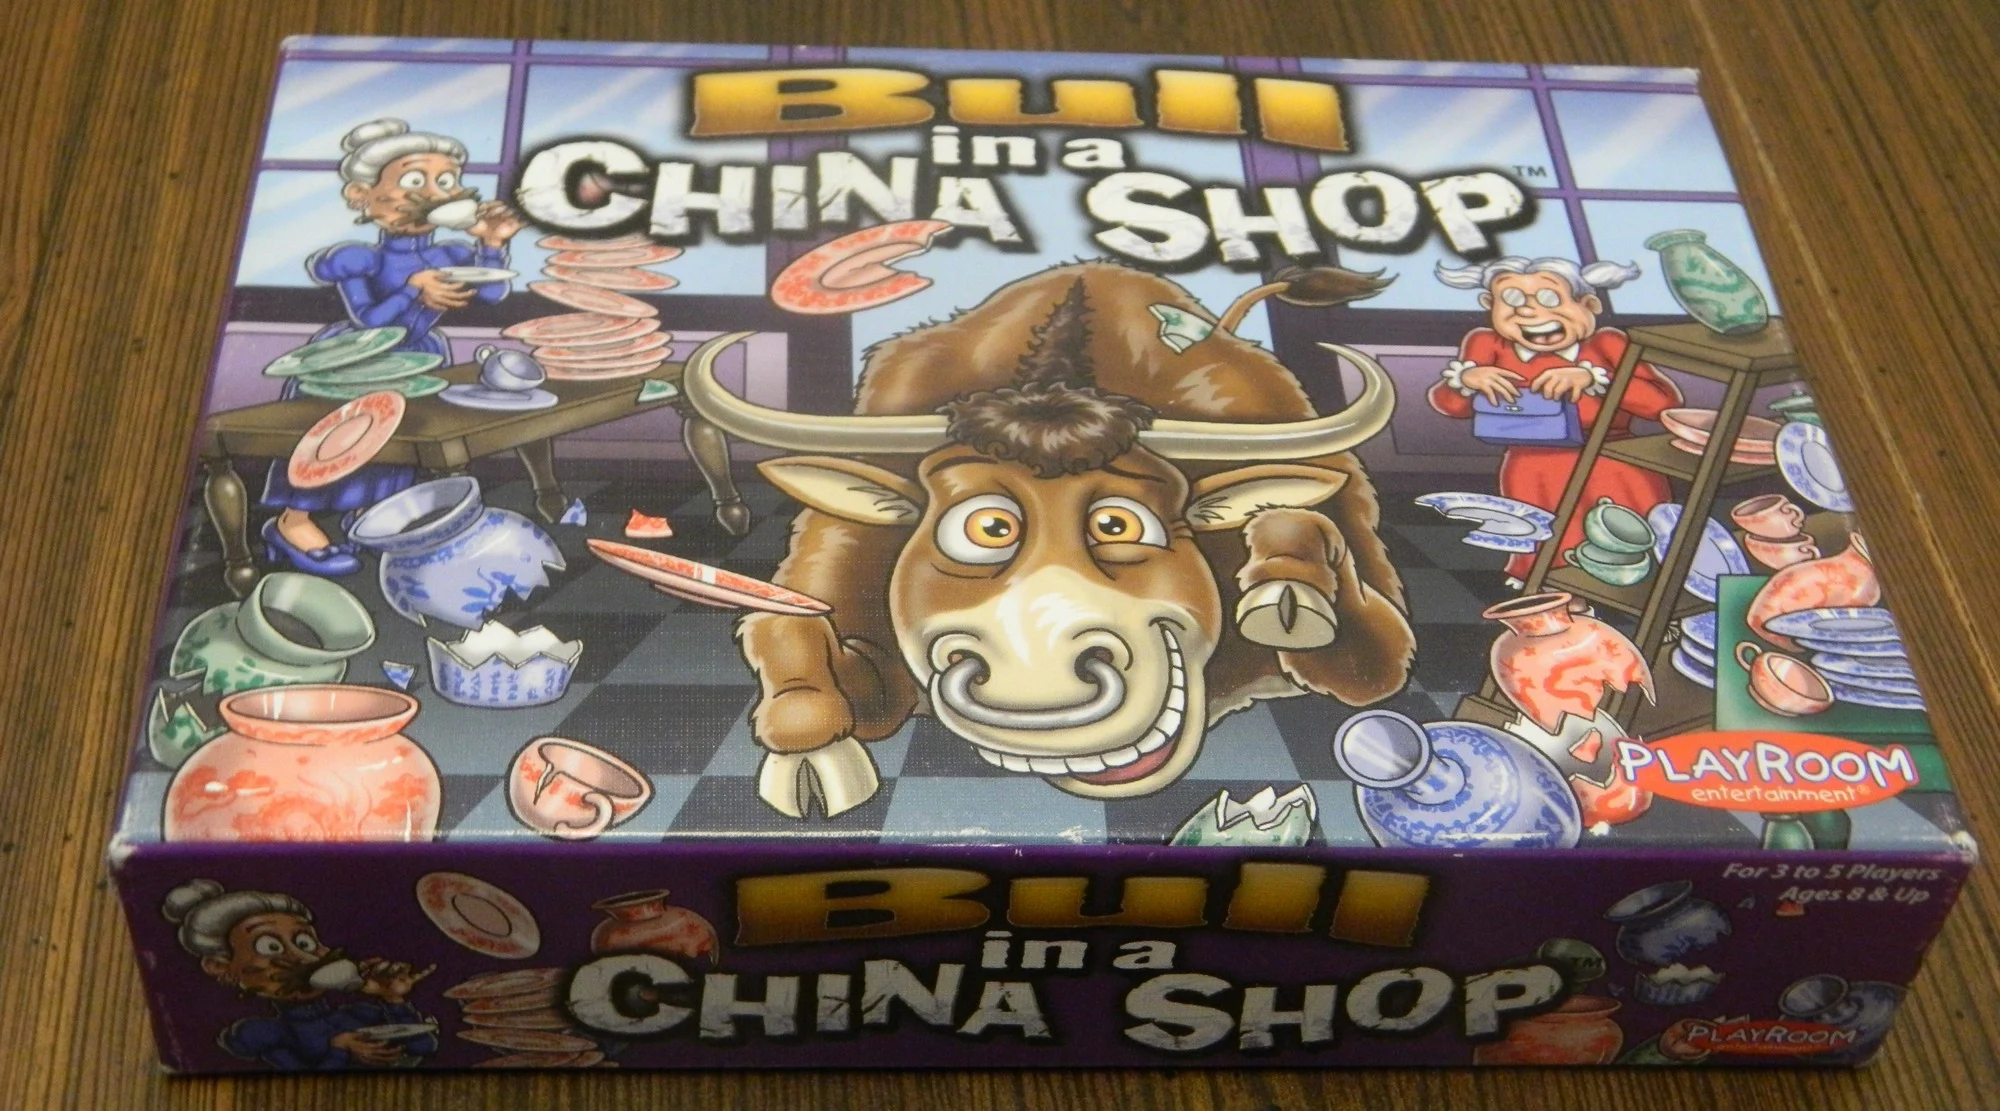 Bull in a China Shop Box